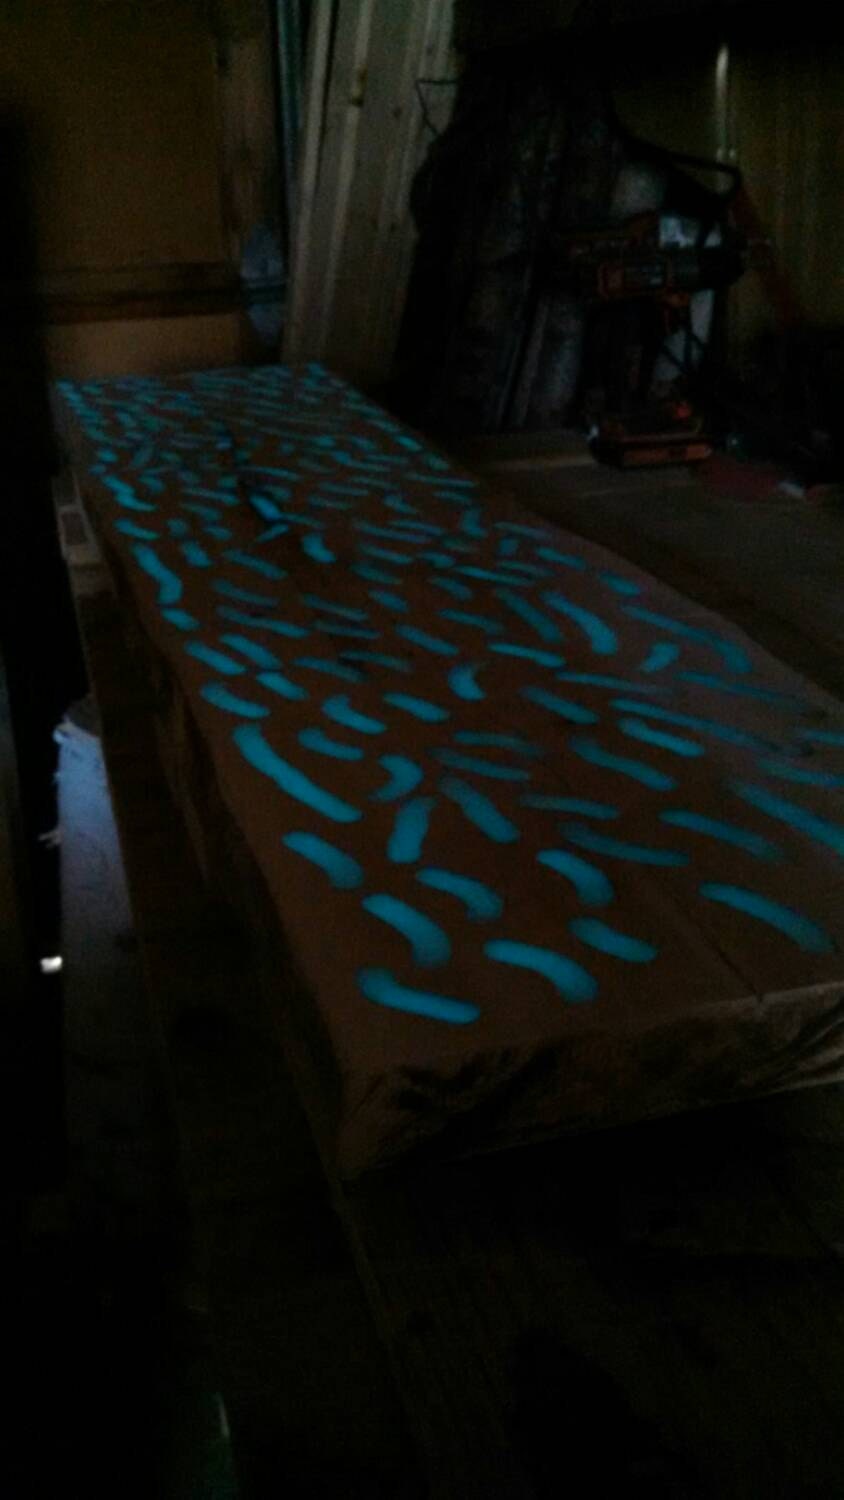 epoxy table glow in the dark